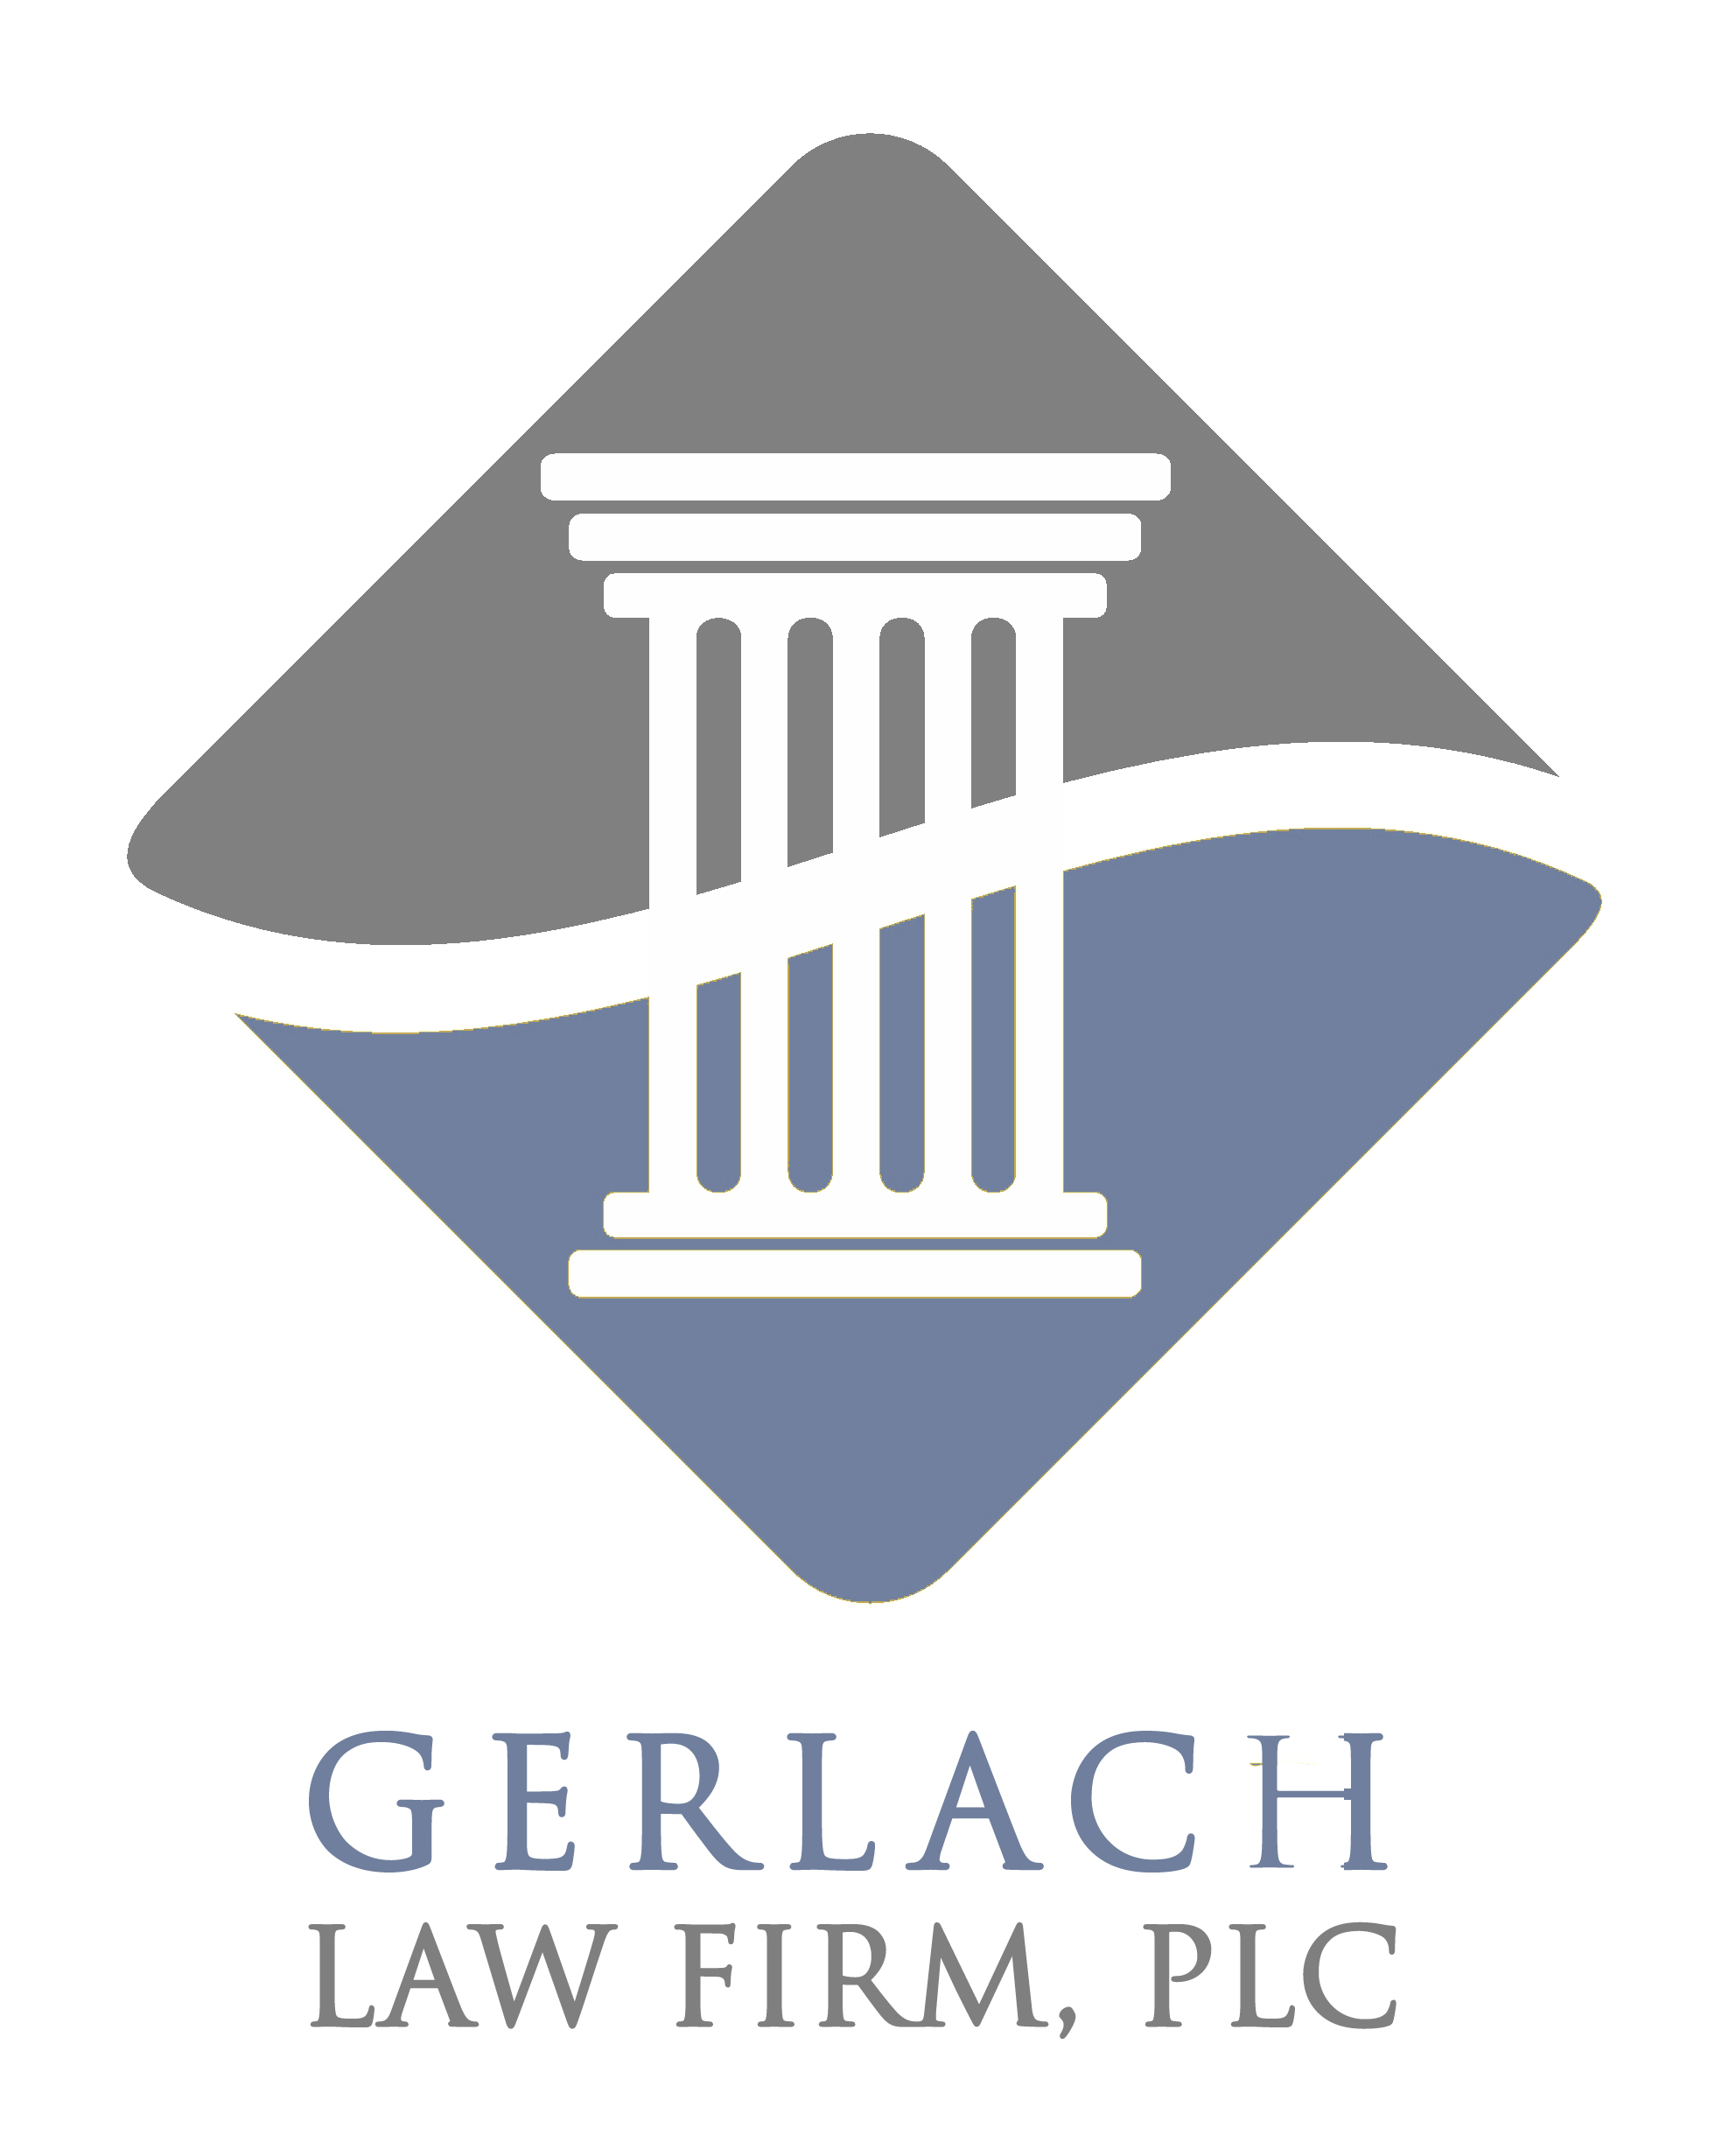 Gerlach Law Firm, PLC